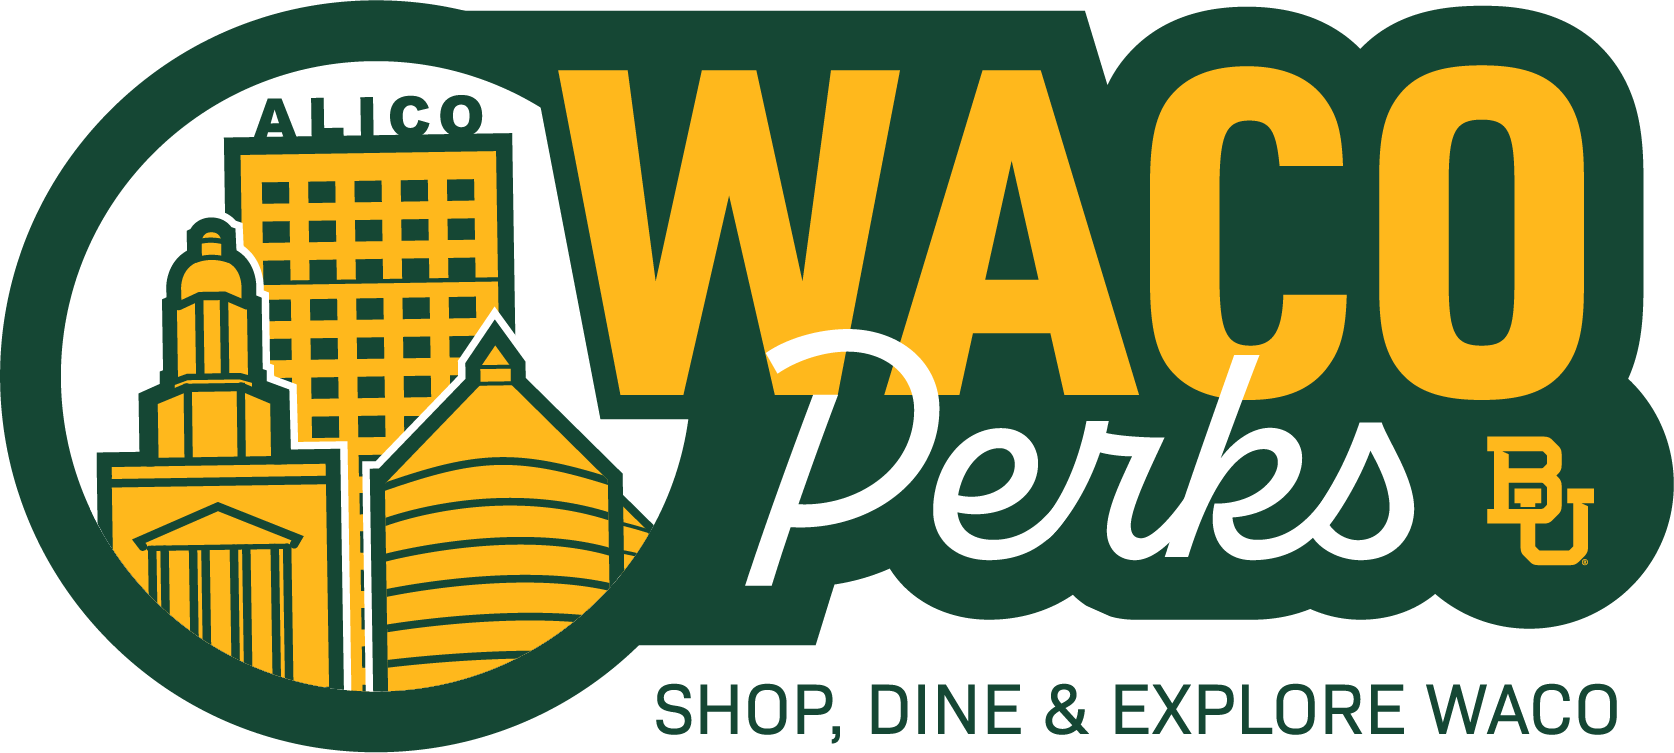 External Affairs - Waco